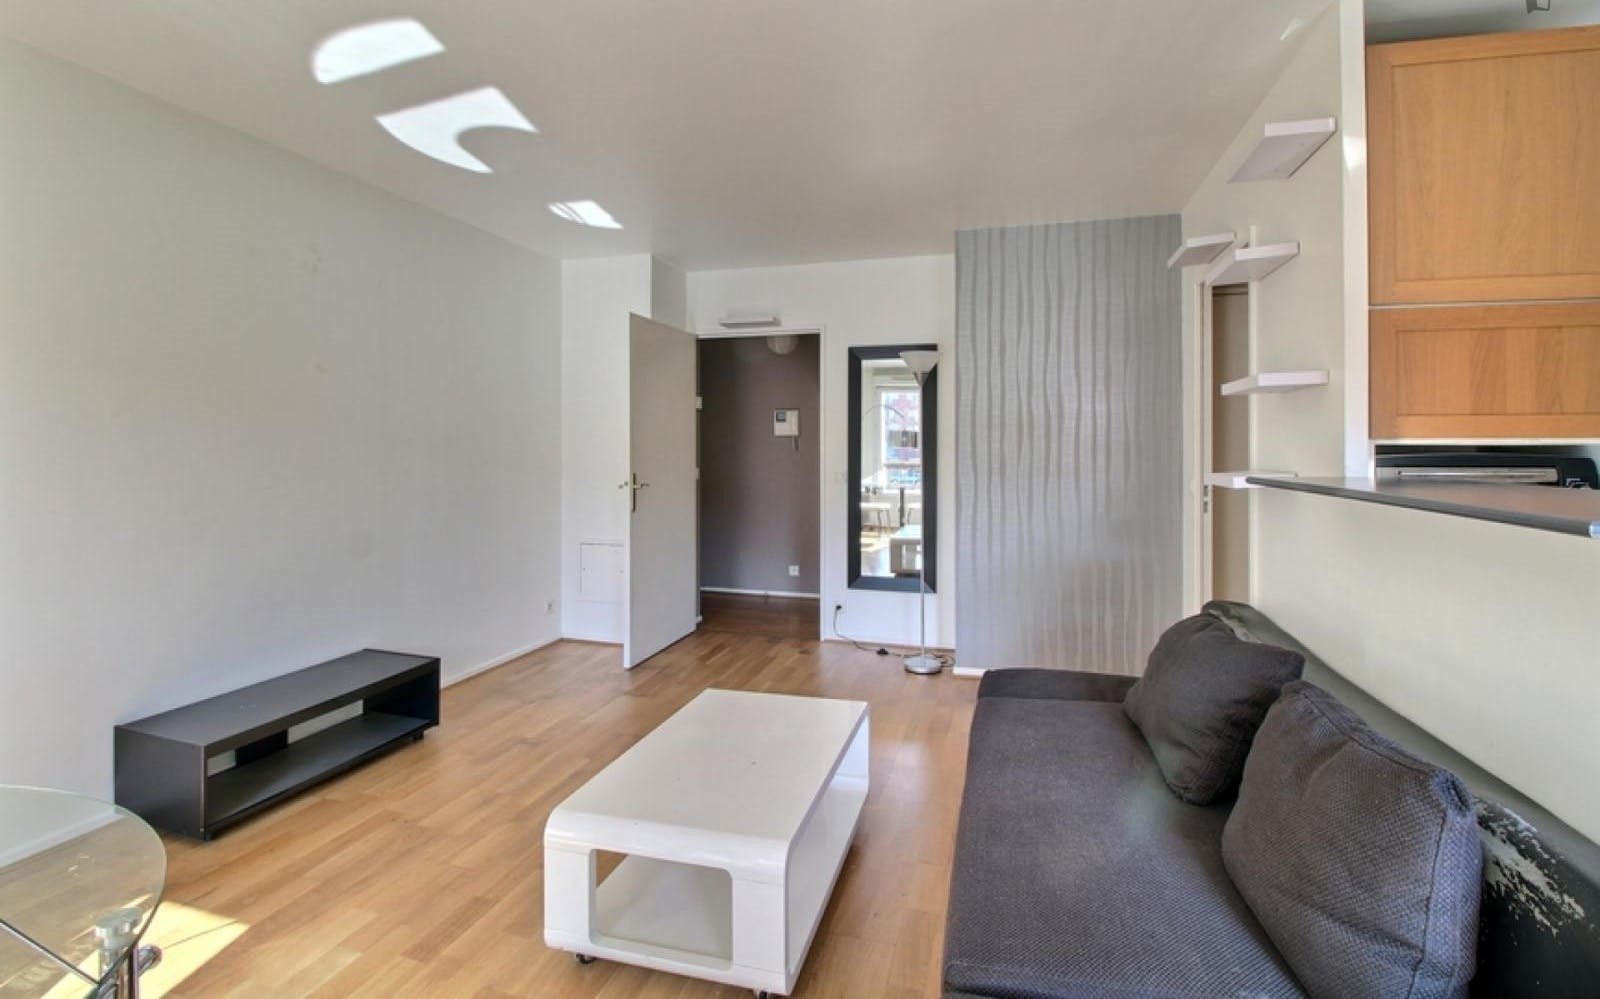 Appealing 2-bedroom apartment in Petite Prusse